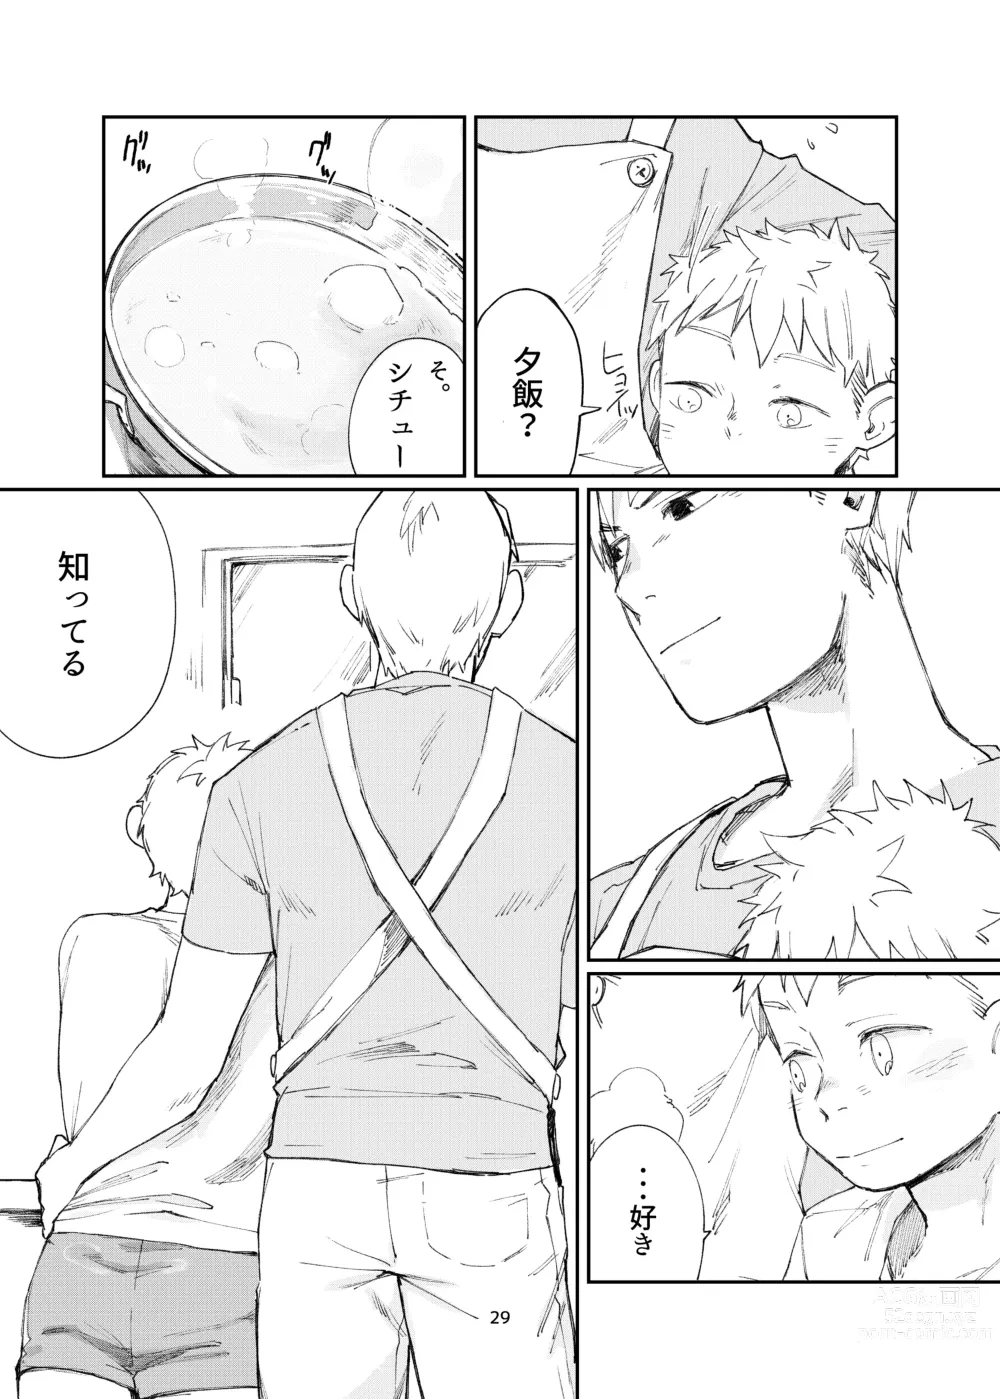 Page 29 of doujinshi Hajimari Hajimari -Sorekara-